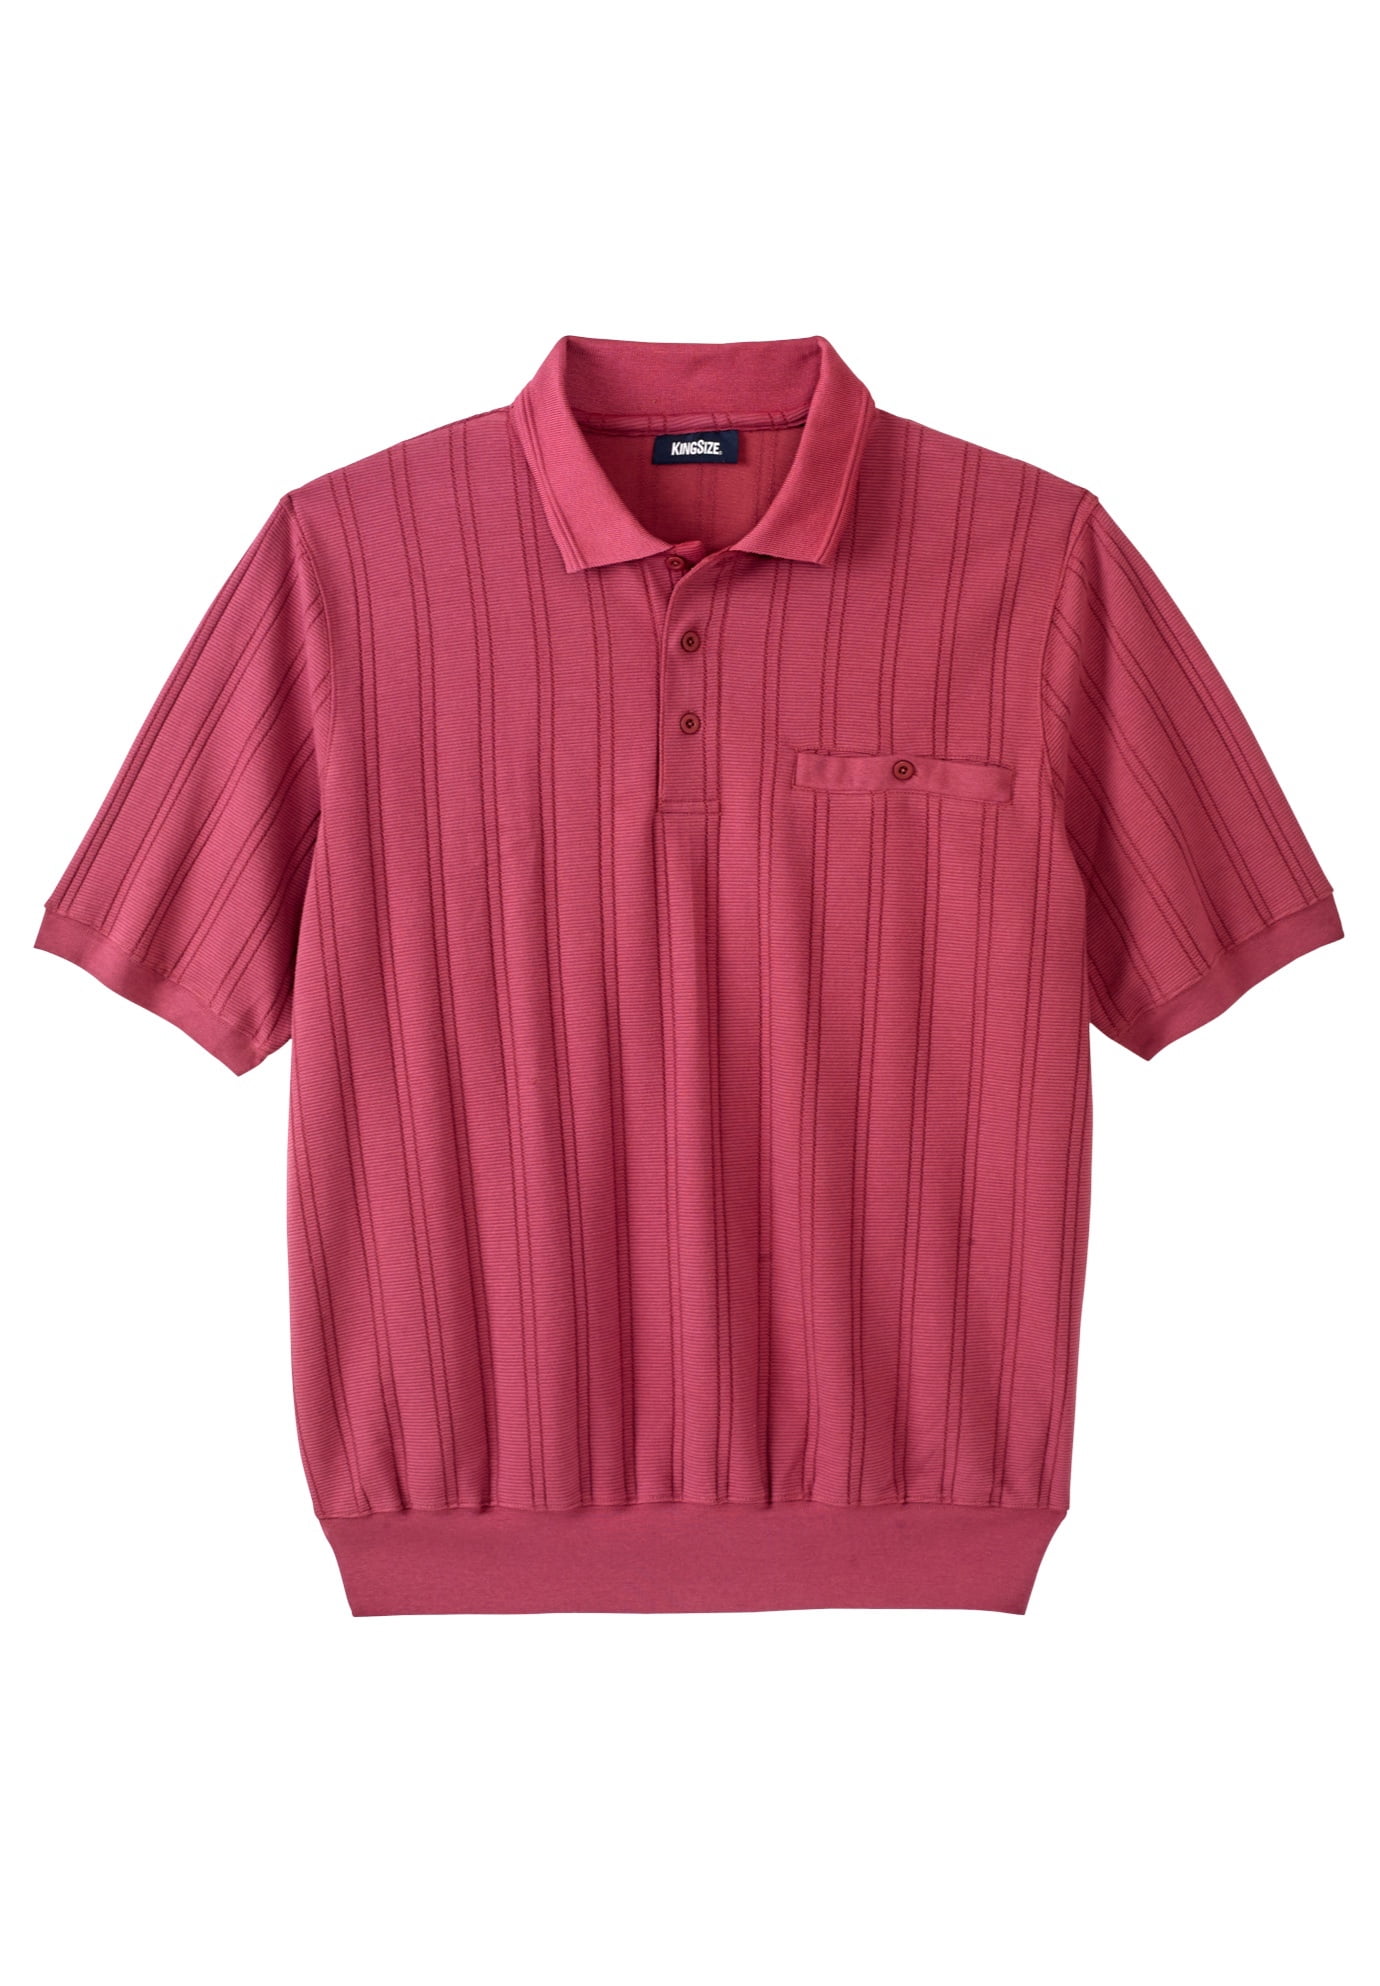 Kingsize Men's Big & Tall Banded Bottom Polo Shirt - Walmart.com